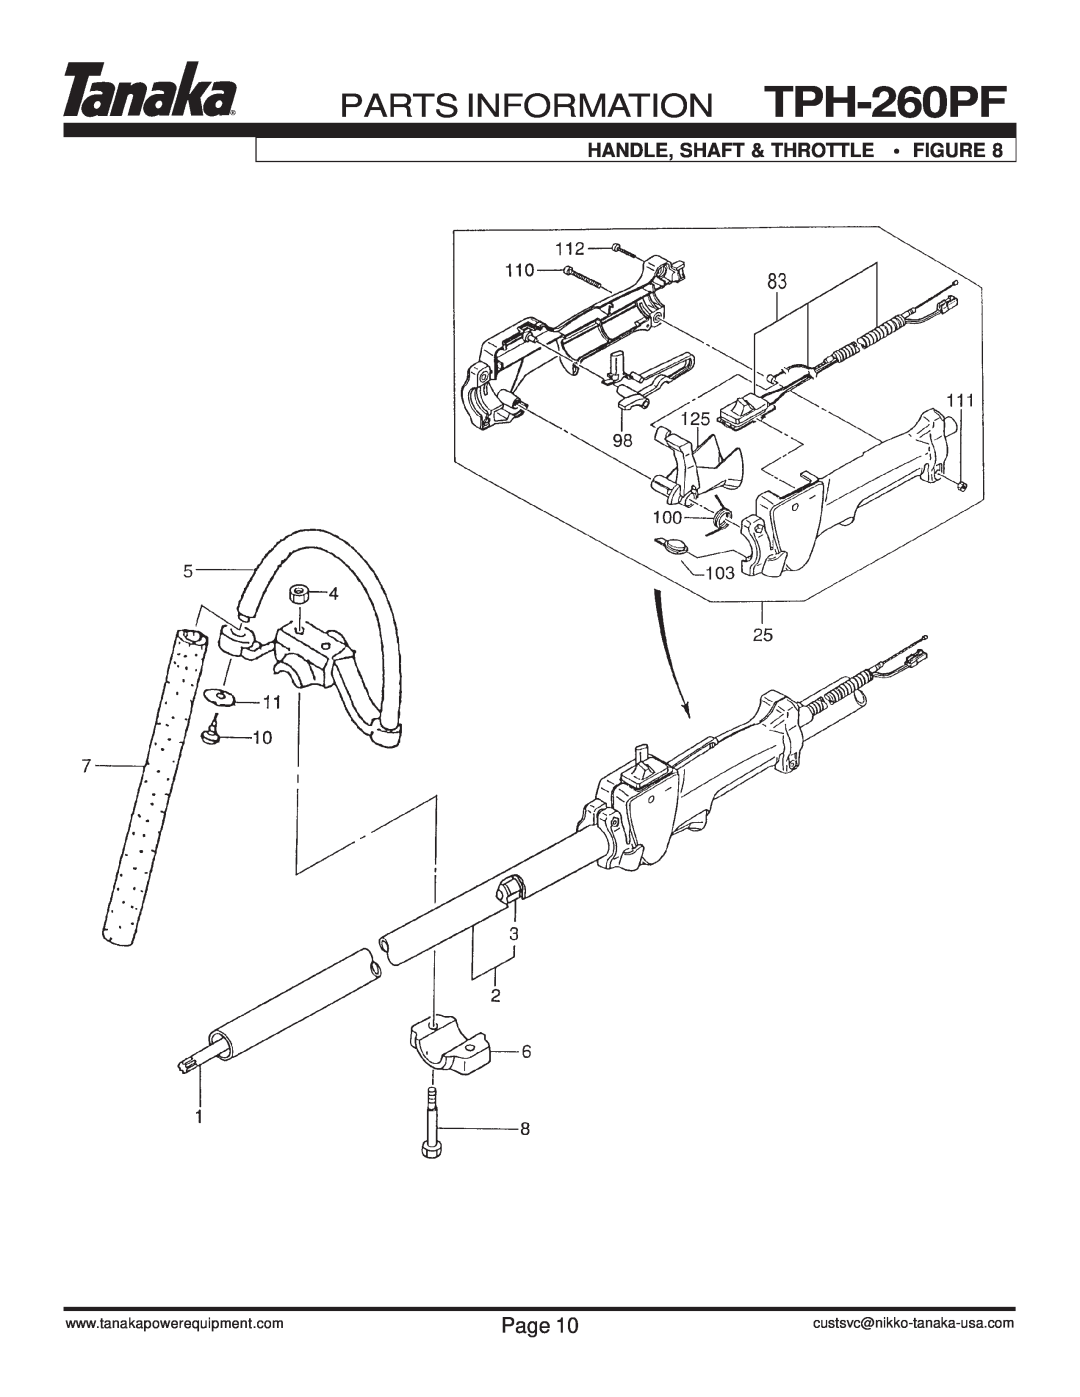 Tanaka manual Handle, Shaft & Throttle Figure, PARTS INFORMATION TPH-260PF, Page, custsvc@nikko-tanaka-usa.com 